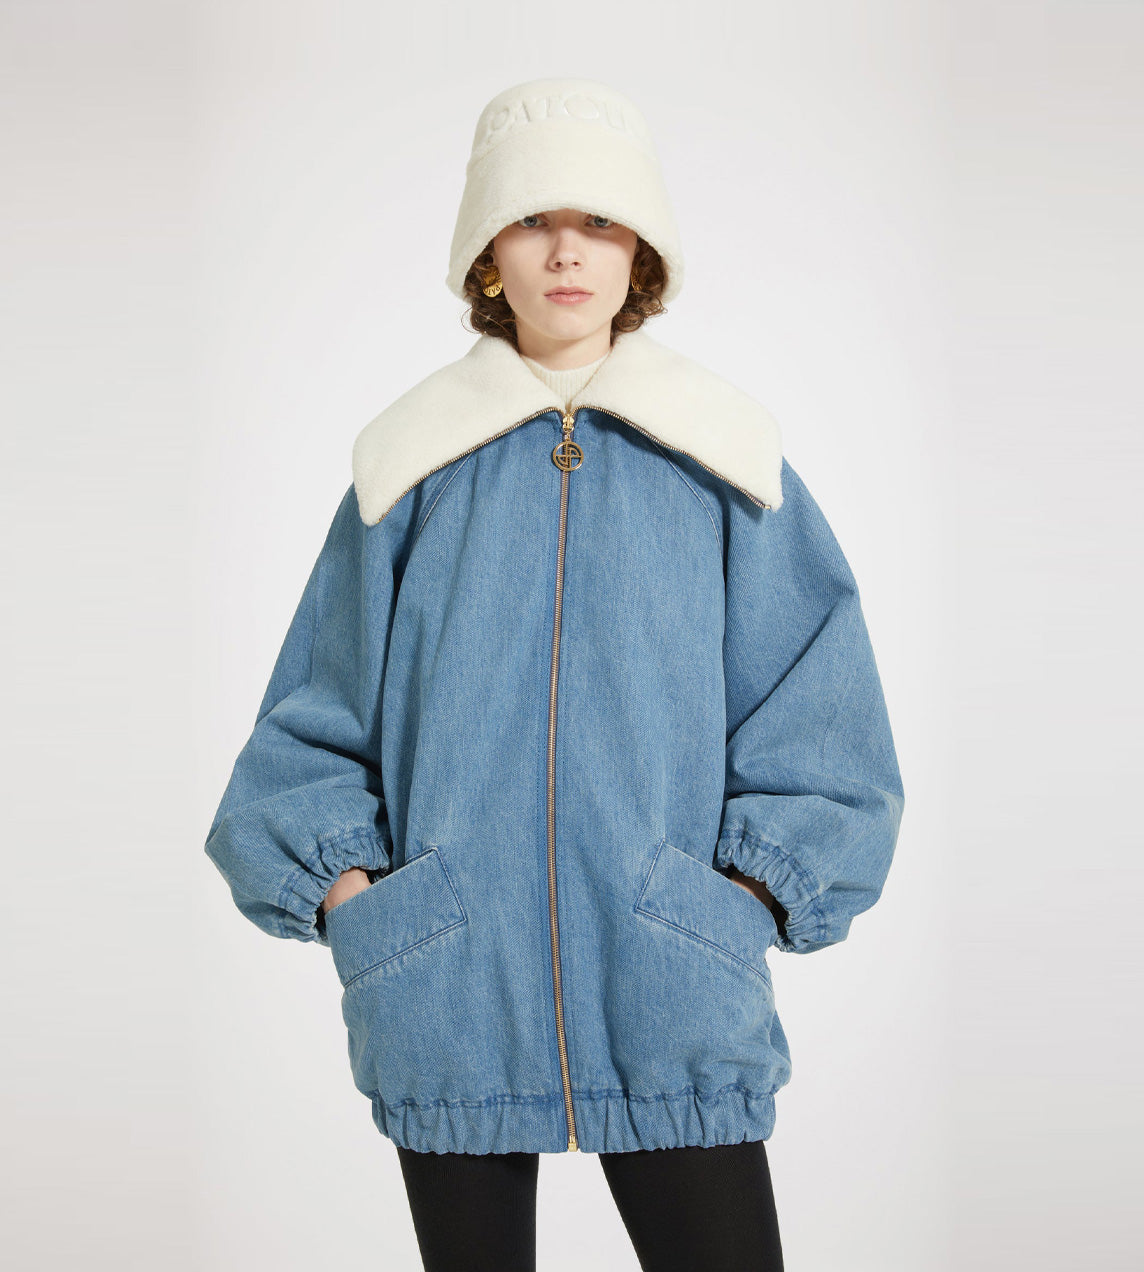 Patou - Oversized Denim Shearling Jacket Blue